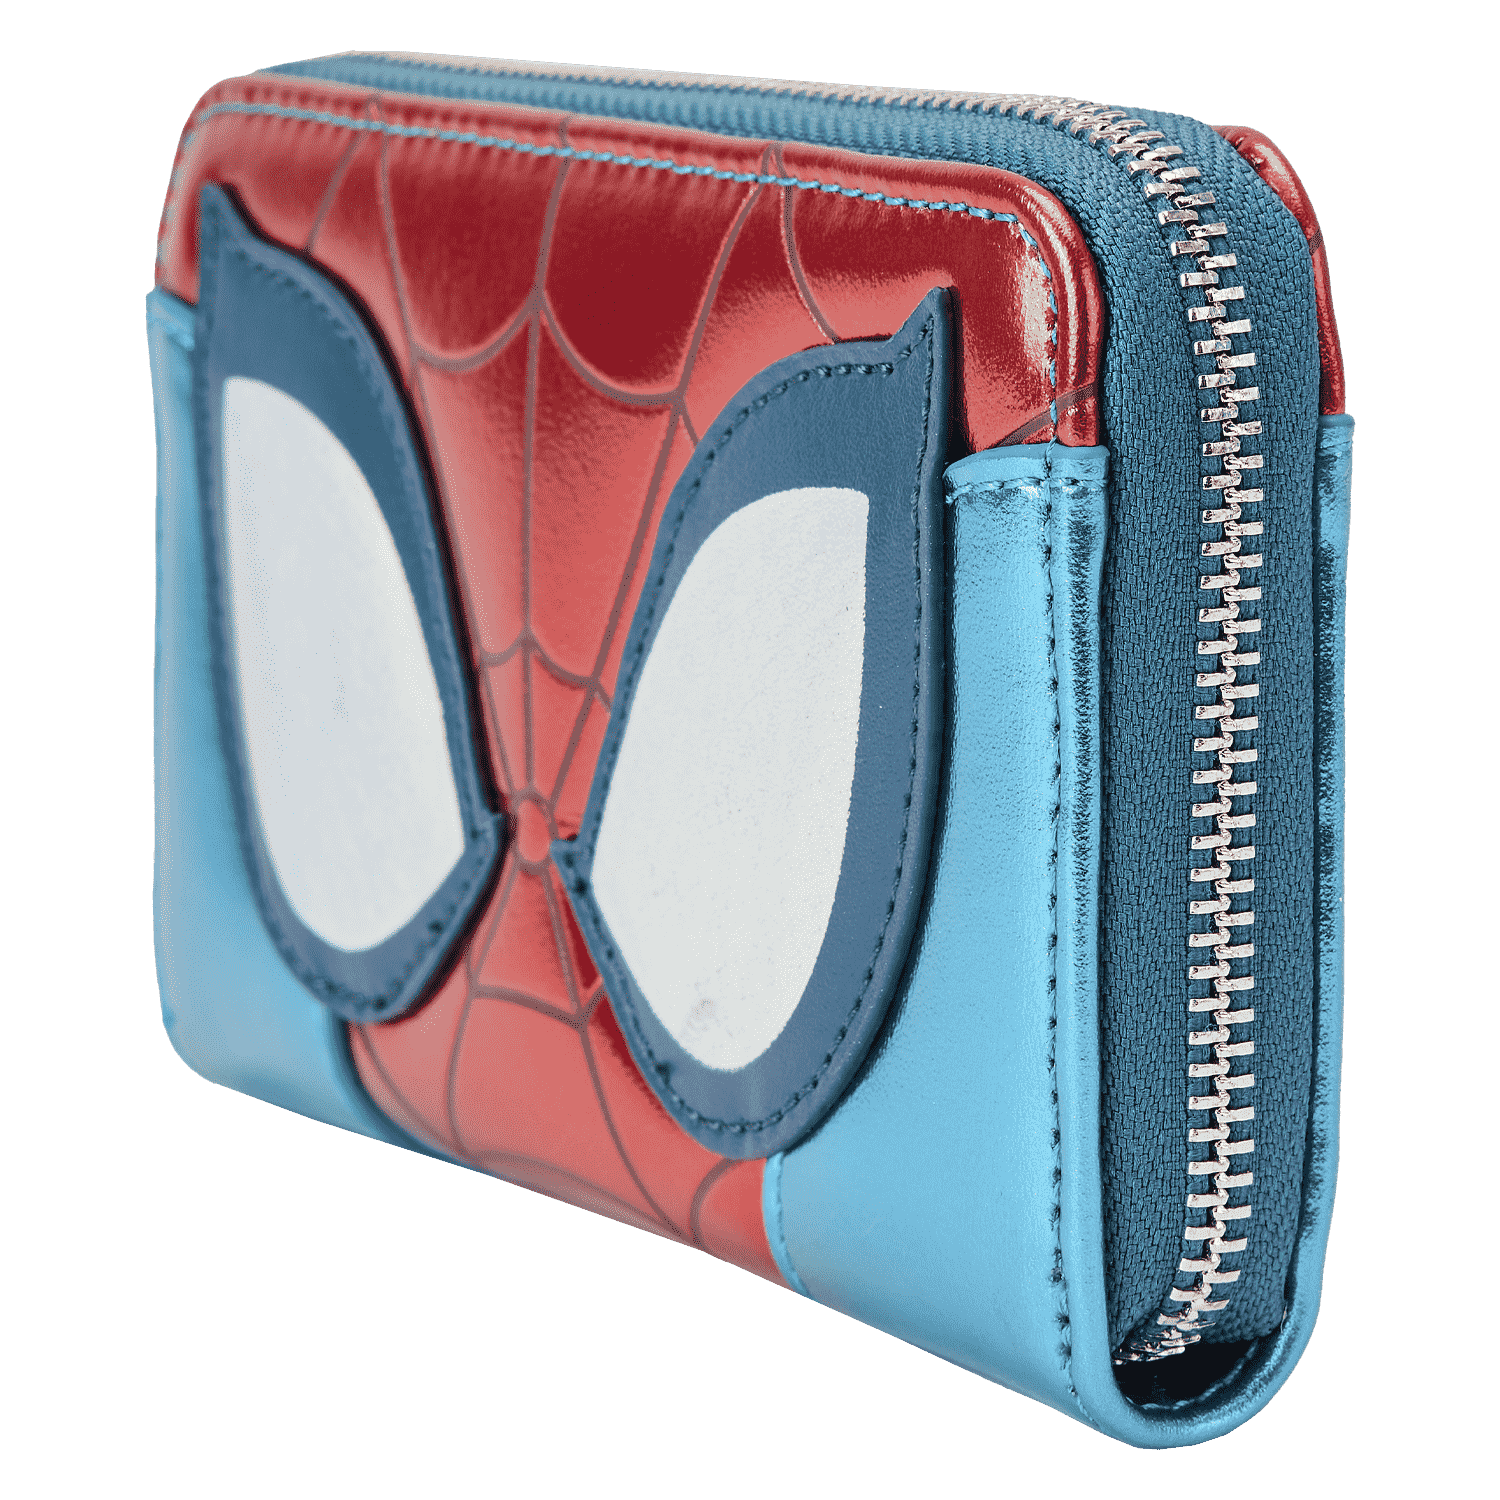 Buy Marvel Metallic Spider-Man Zip Around Wallet at Loungefly.